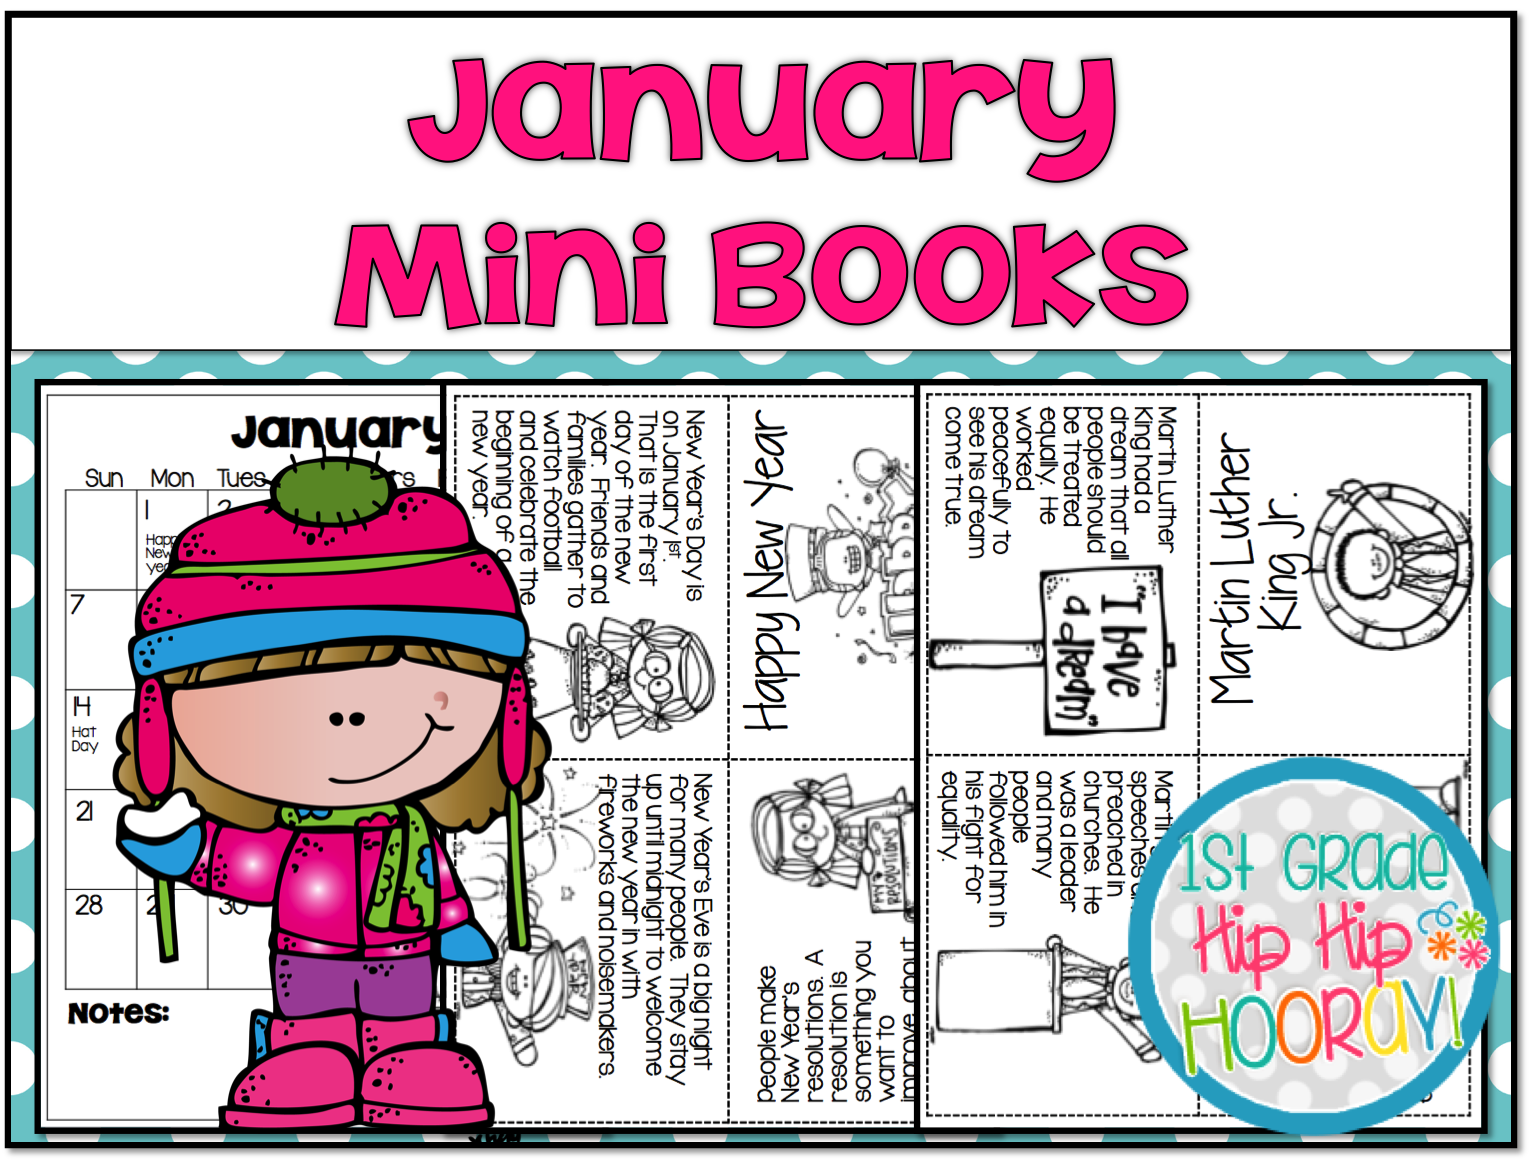 1st-grade-hip-hip-hooray-january-mini-books-print-fold-read